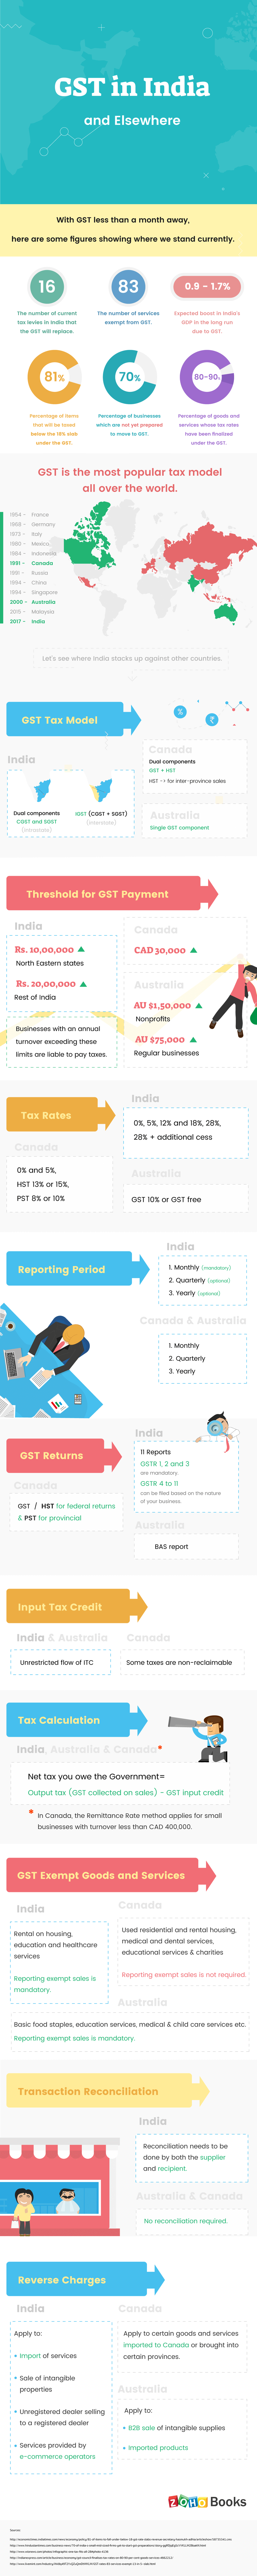 GST Comparison Infographic